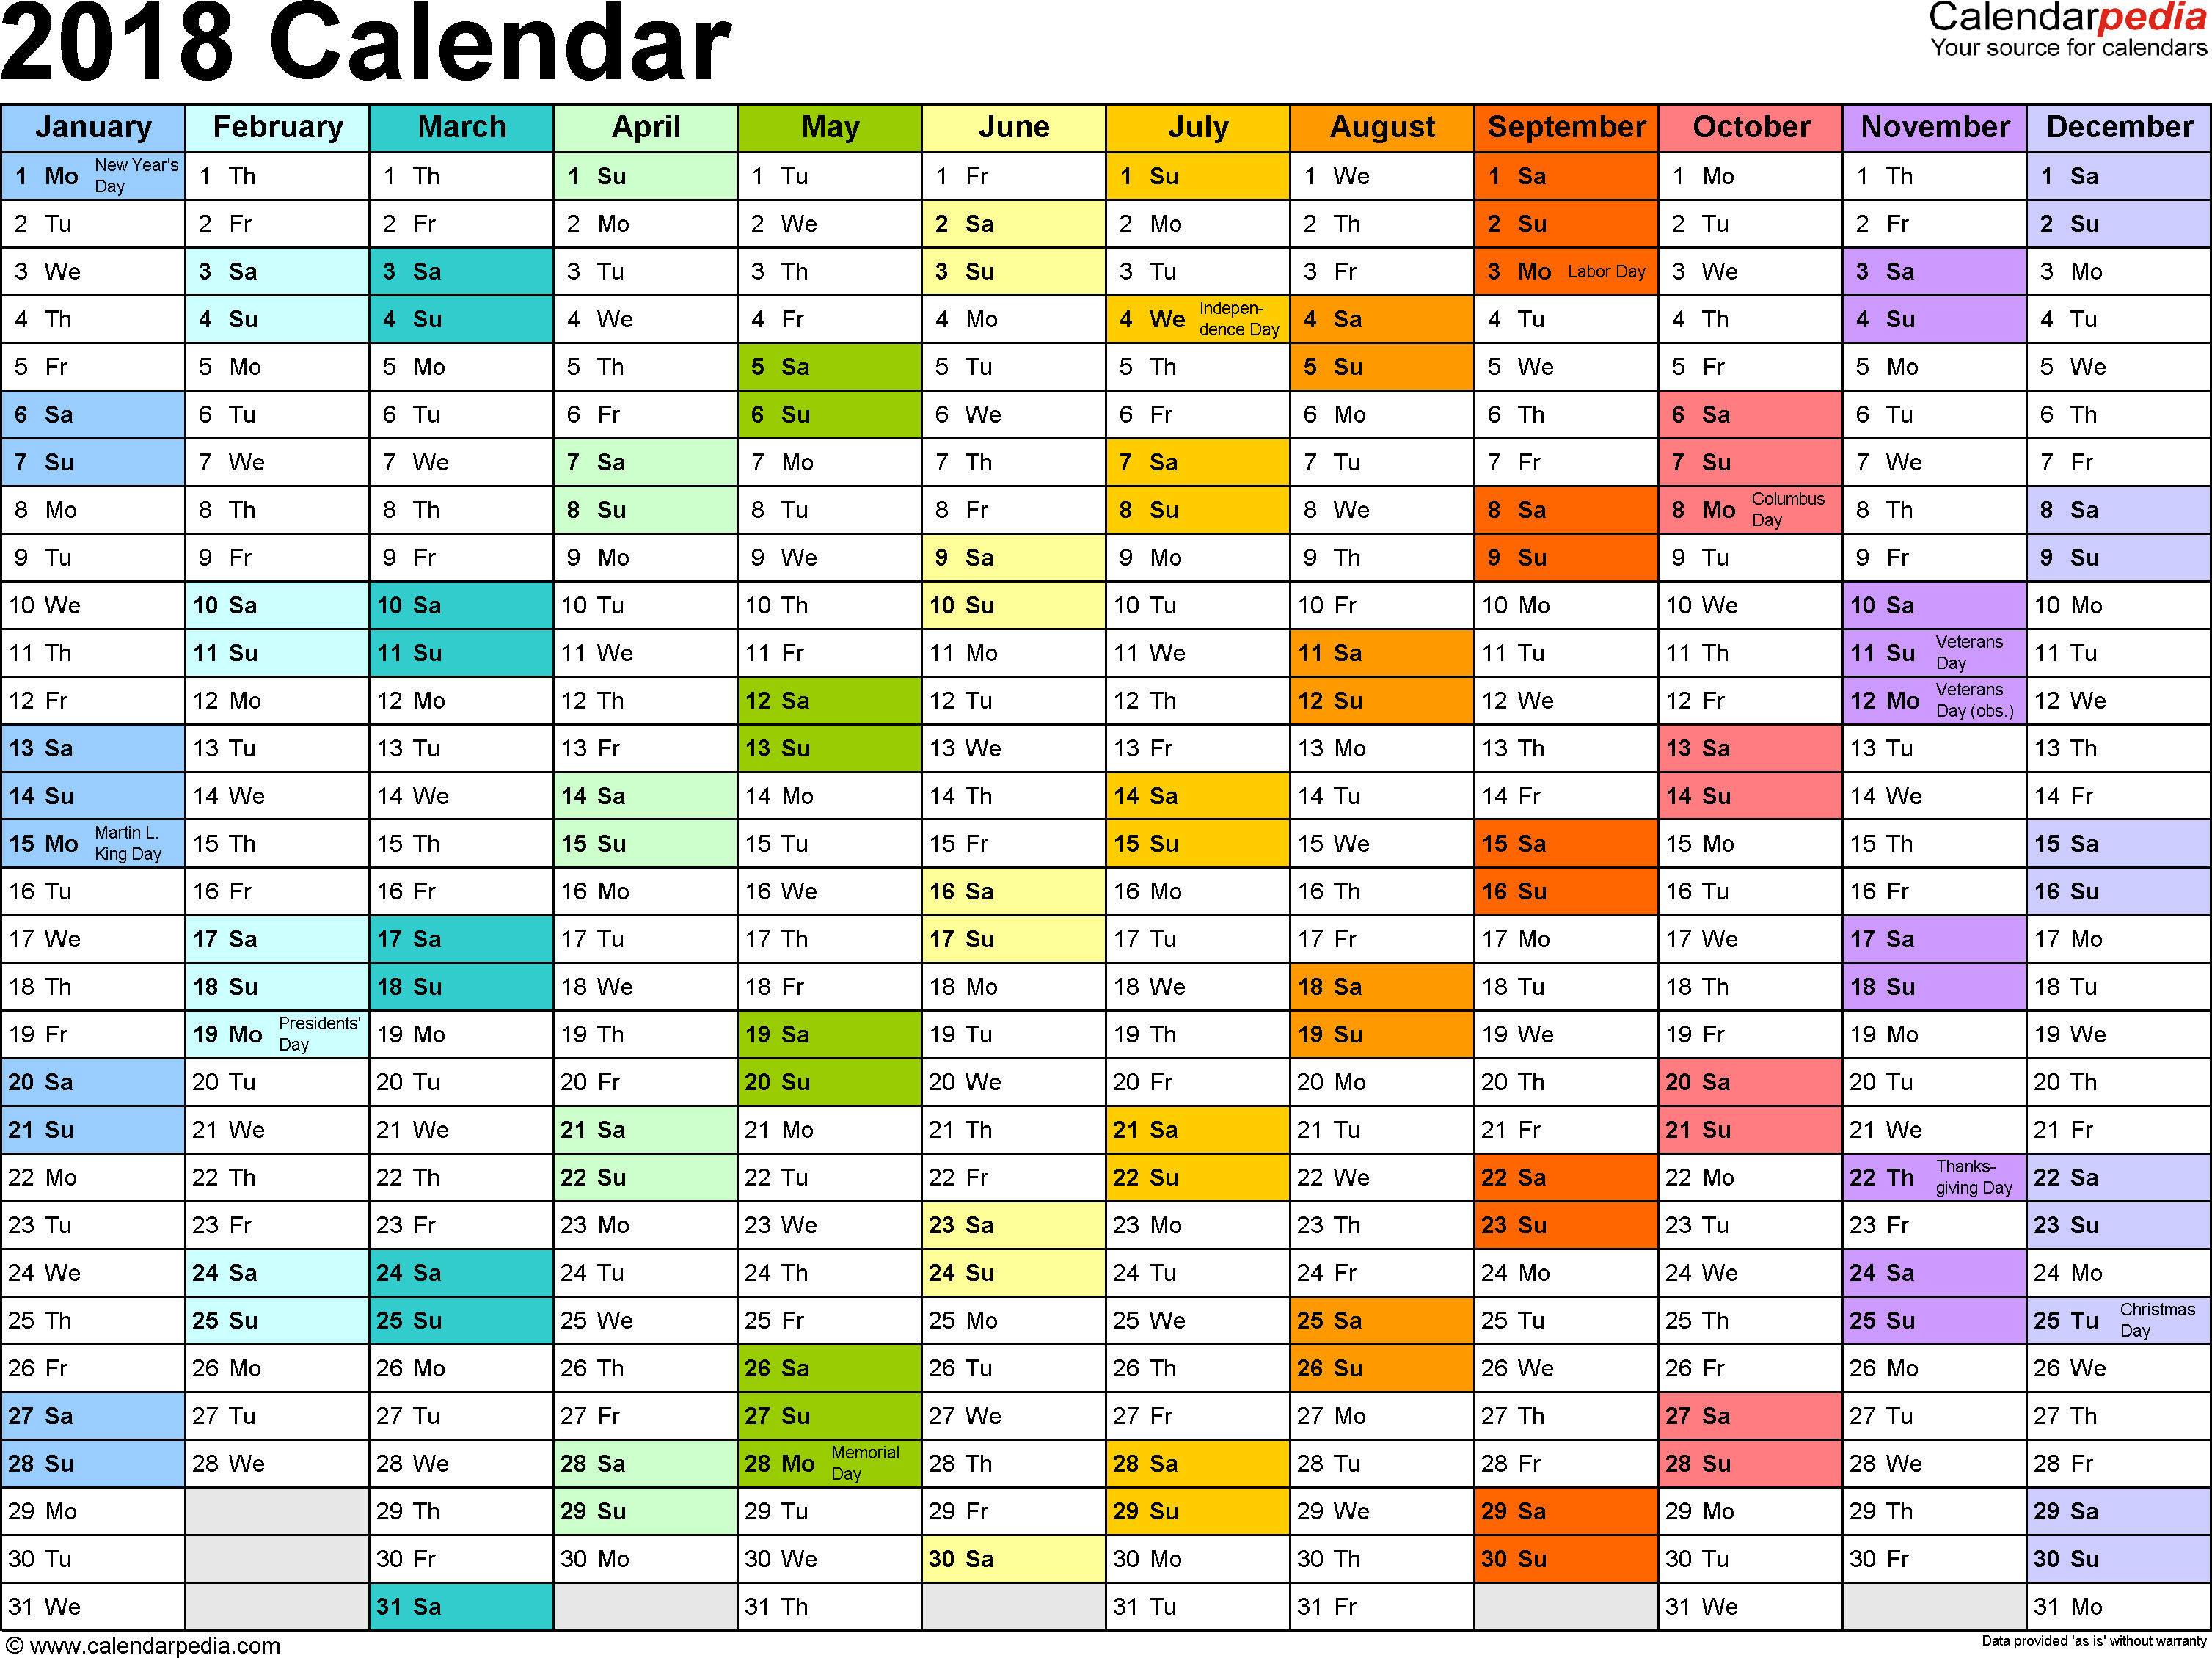 Calendar Template for Word 2018 Calendar 17 Free Printable Word Calendar Templates